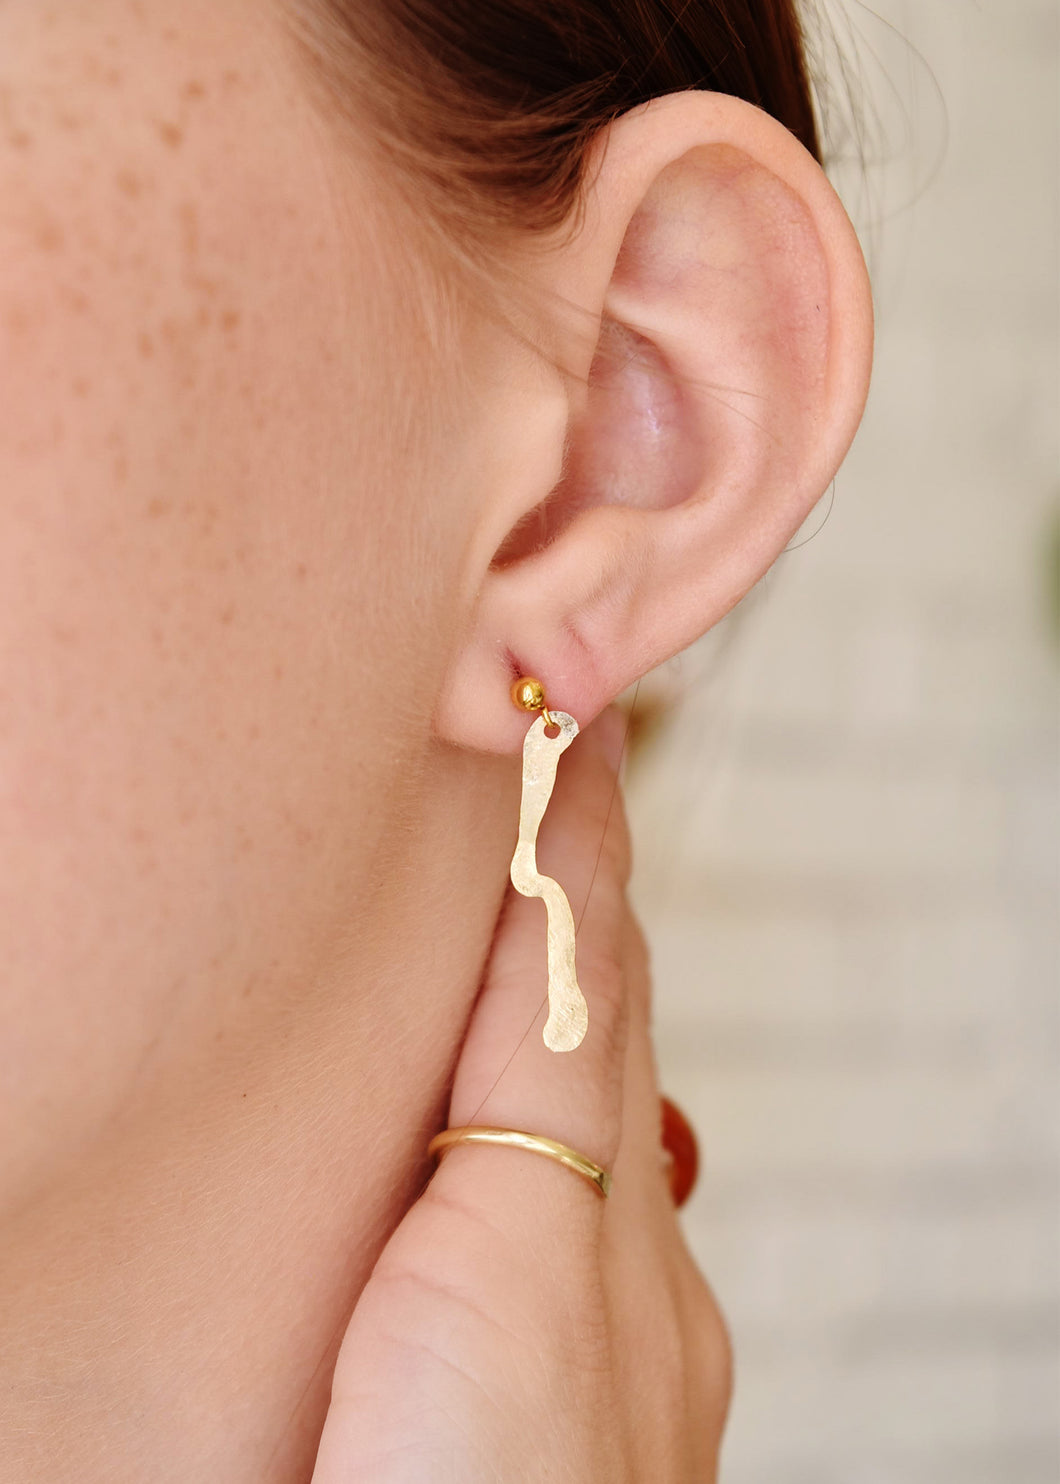 river earrings